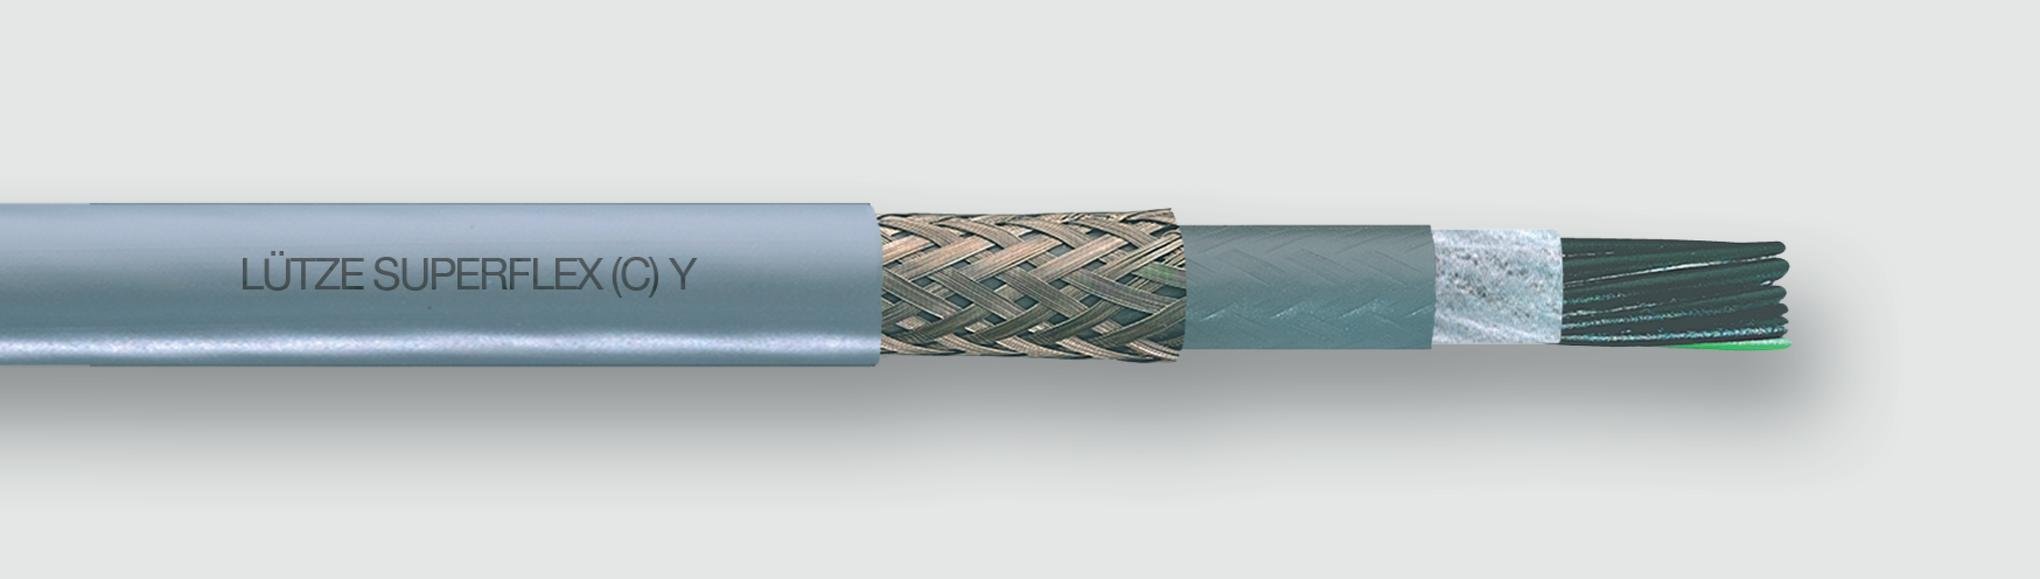 111329 - PVC control cables · C-track compatible · shielded